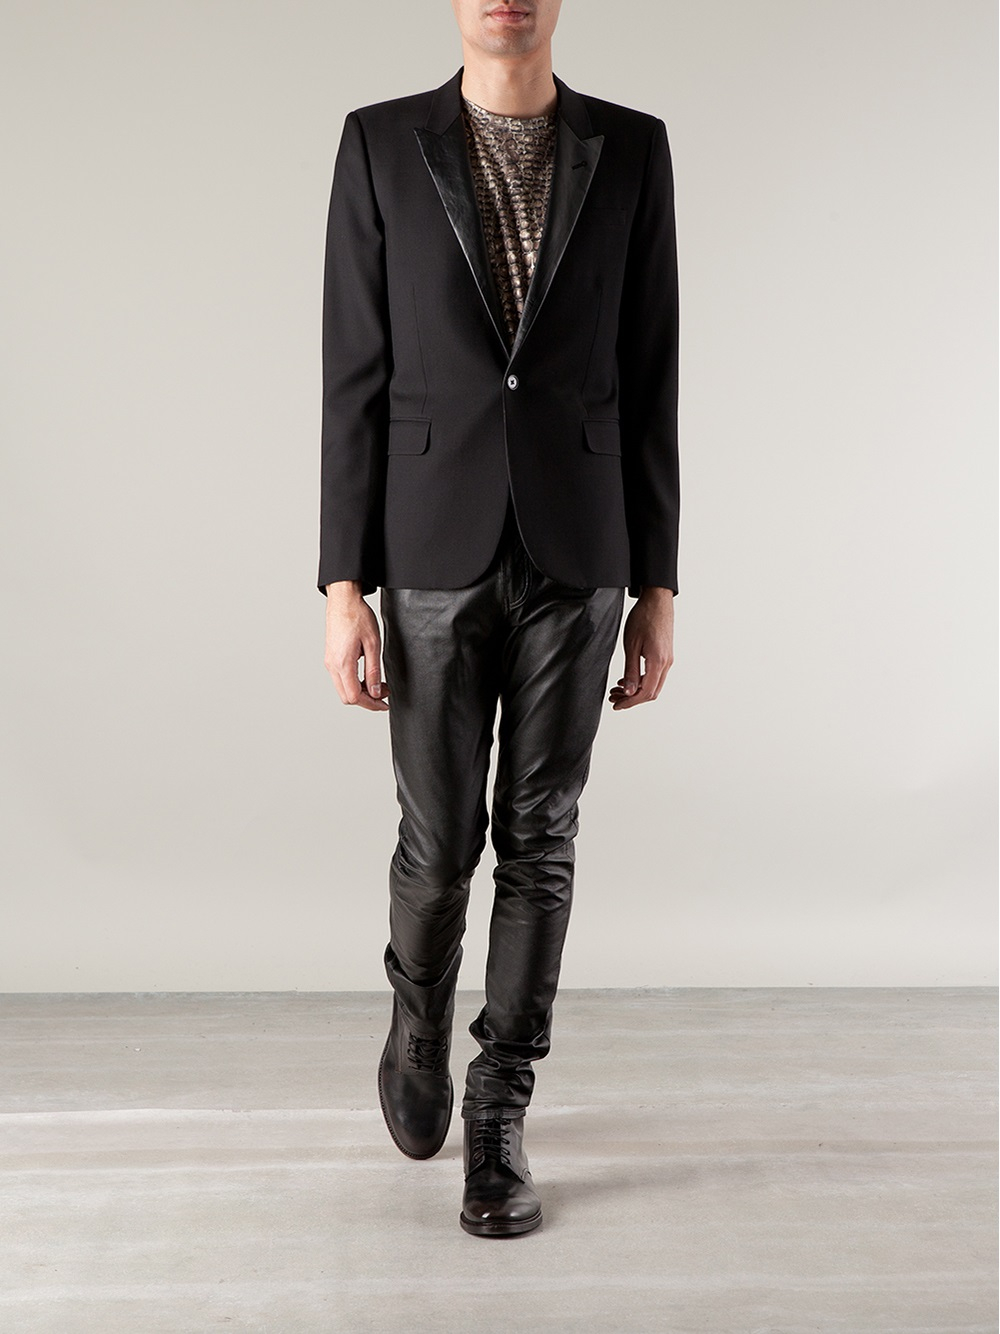 Saint Laurent Leather Lapel Blazer in Black for Men - Lyst